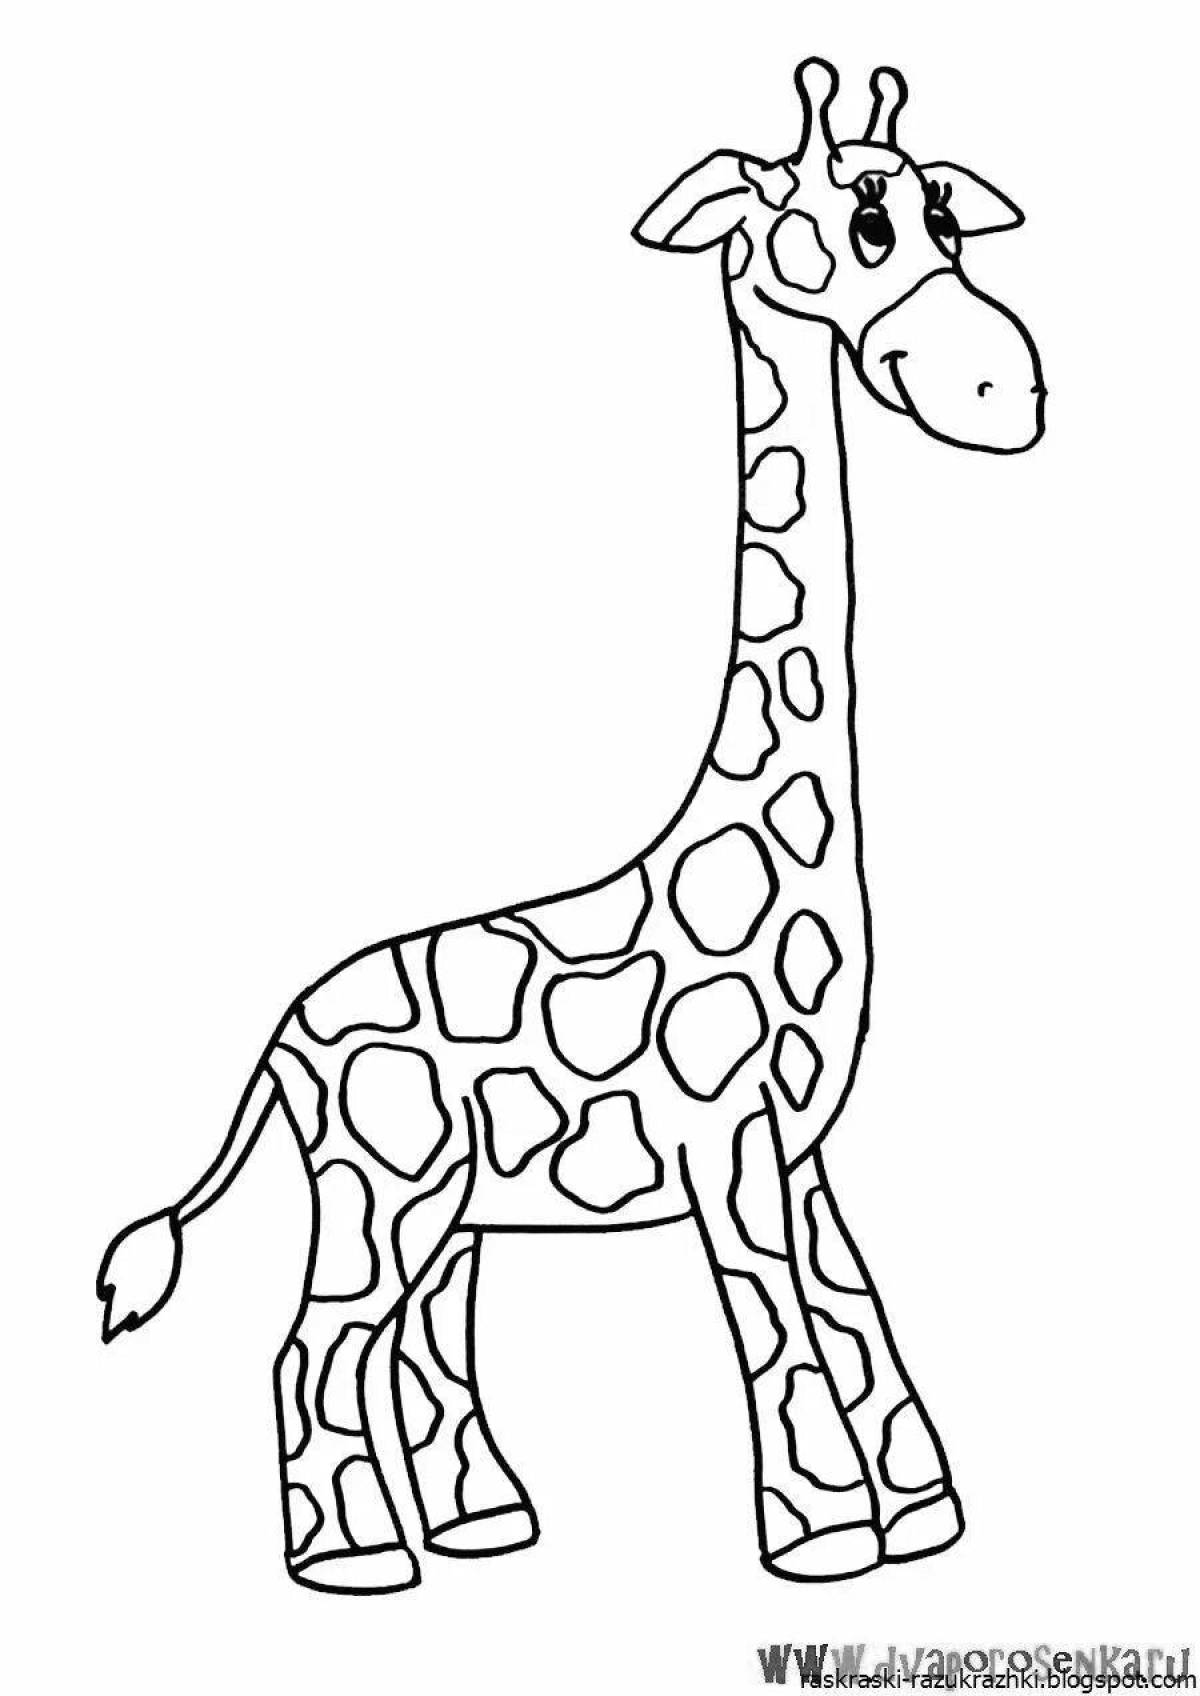 Sweet coloring giraffe